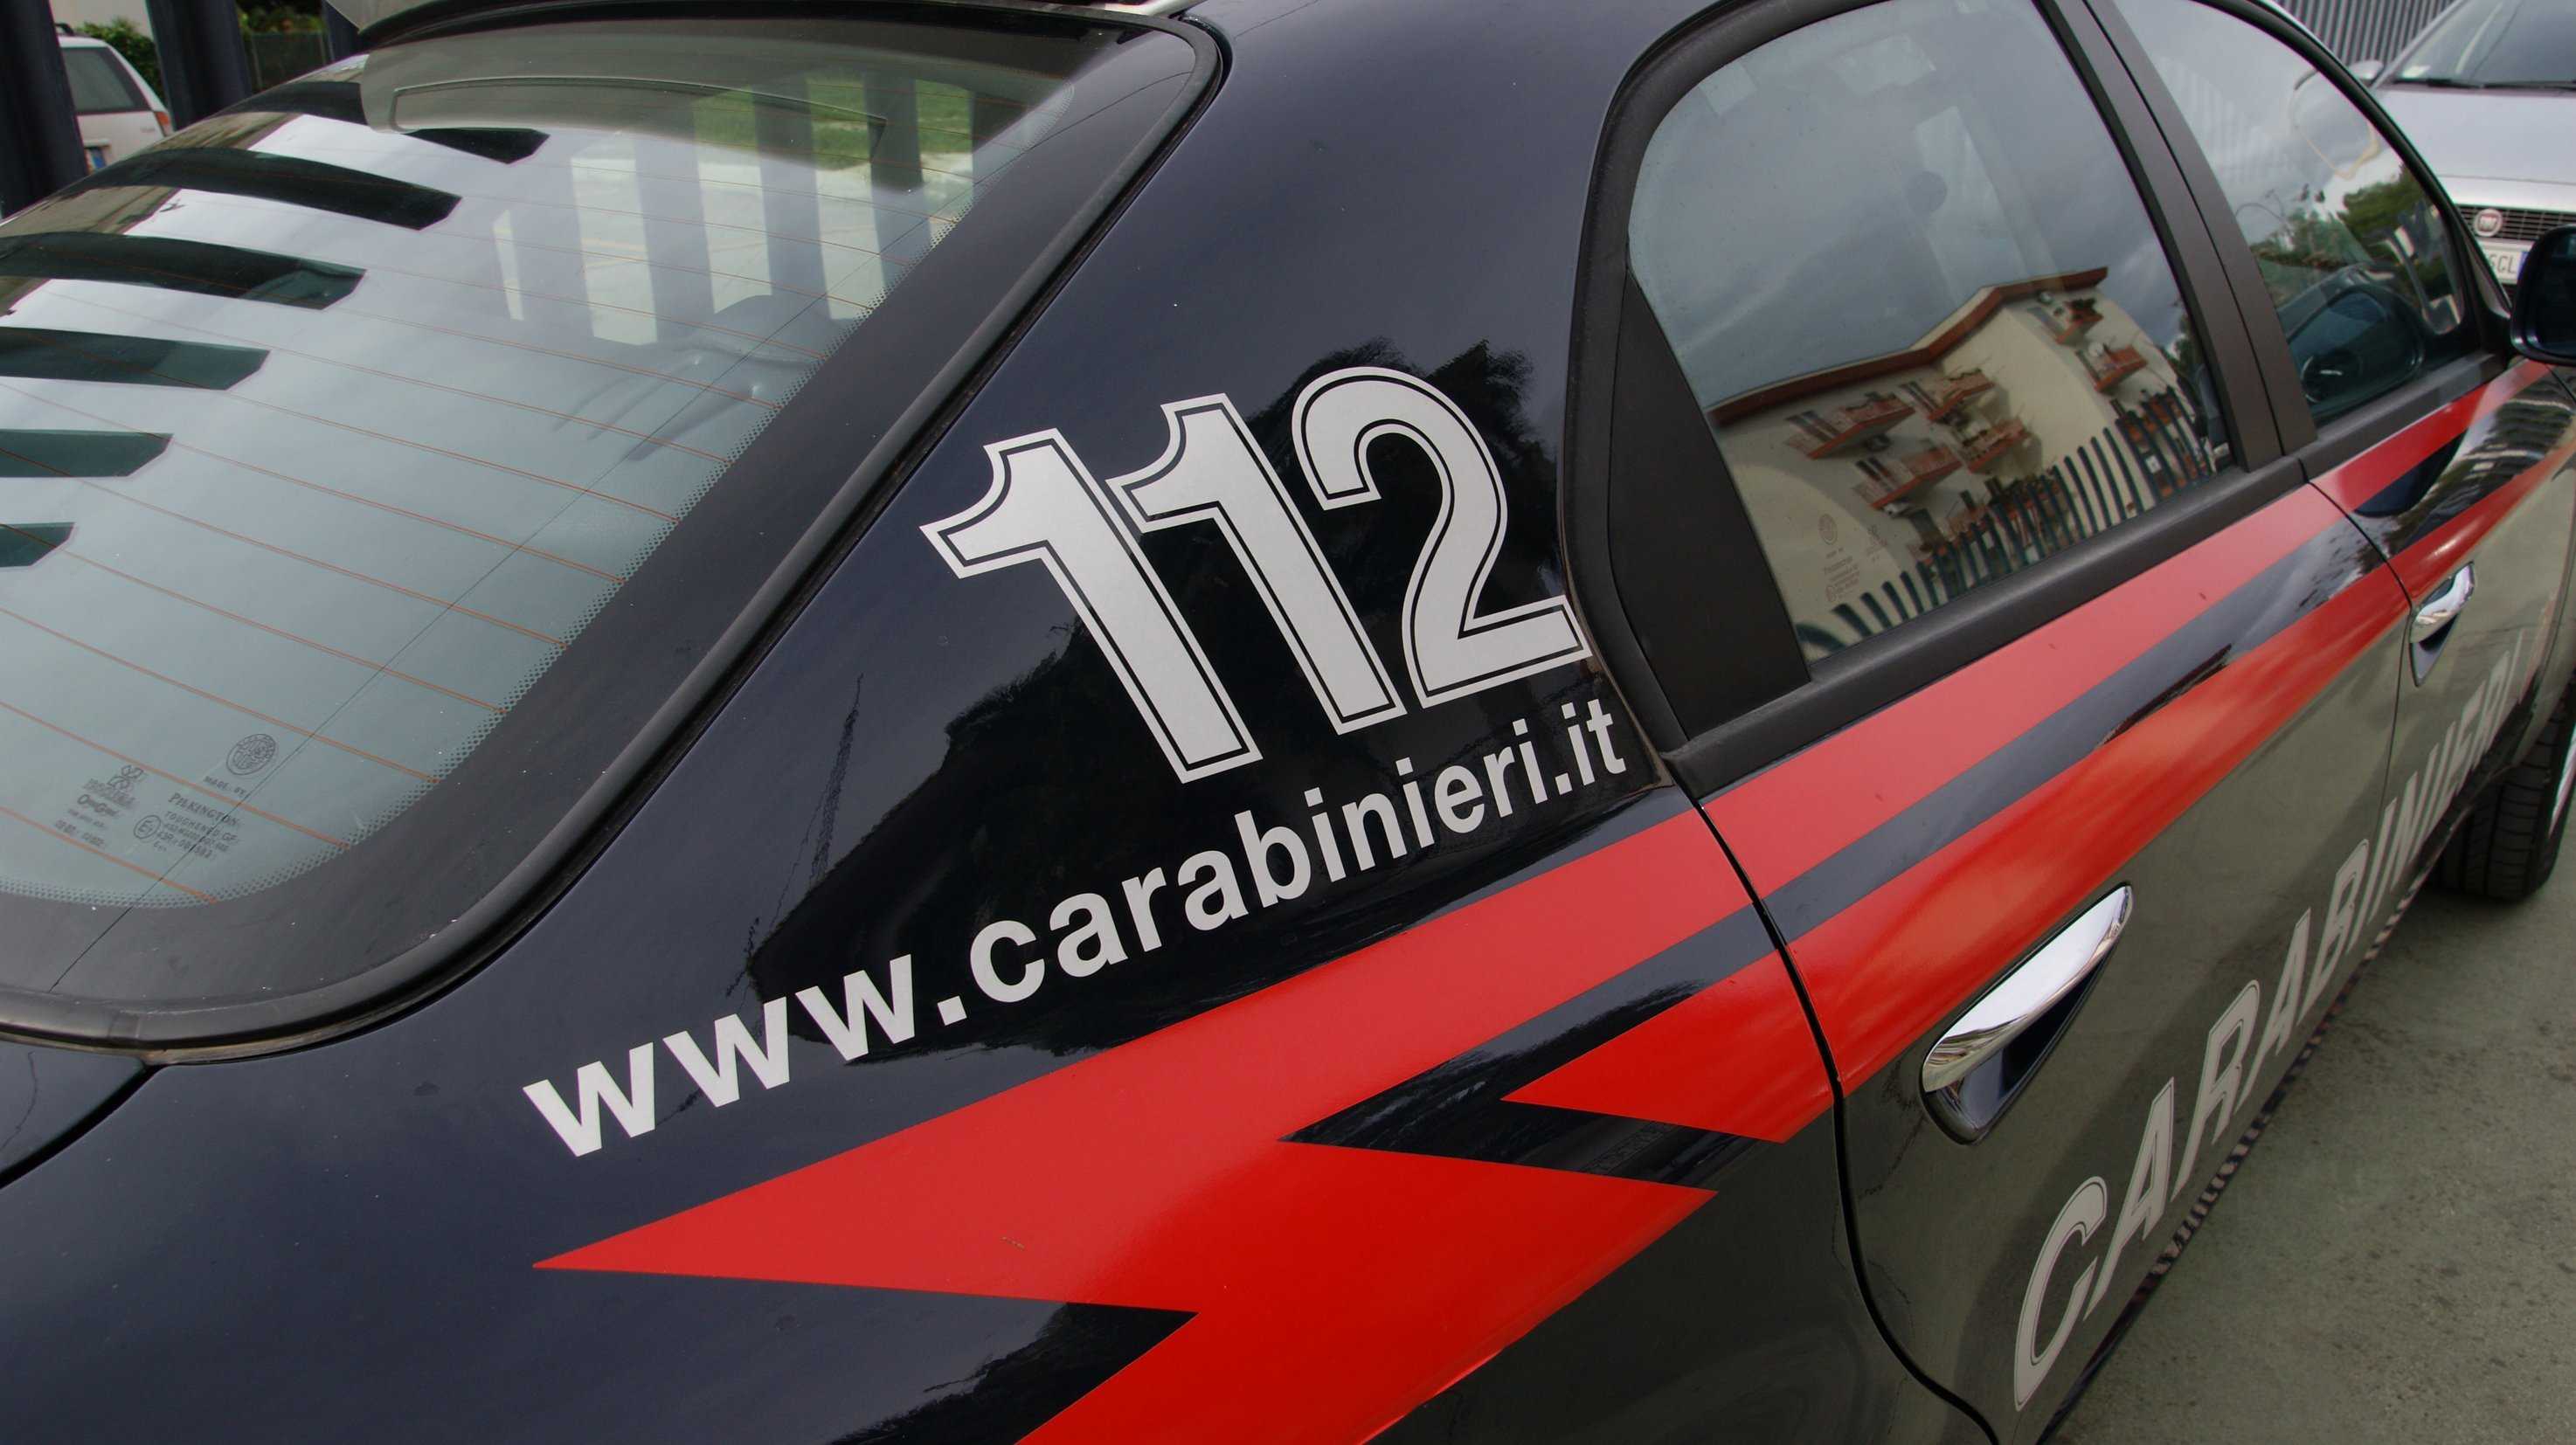 'Ndrangheta: maxi blitz Cc, arrestati anche politici